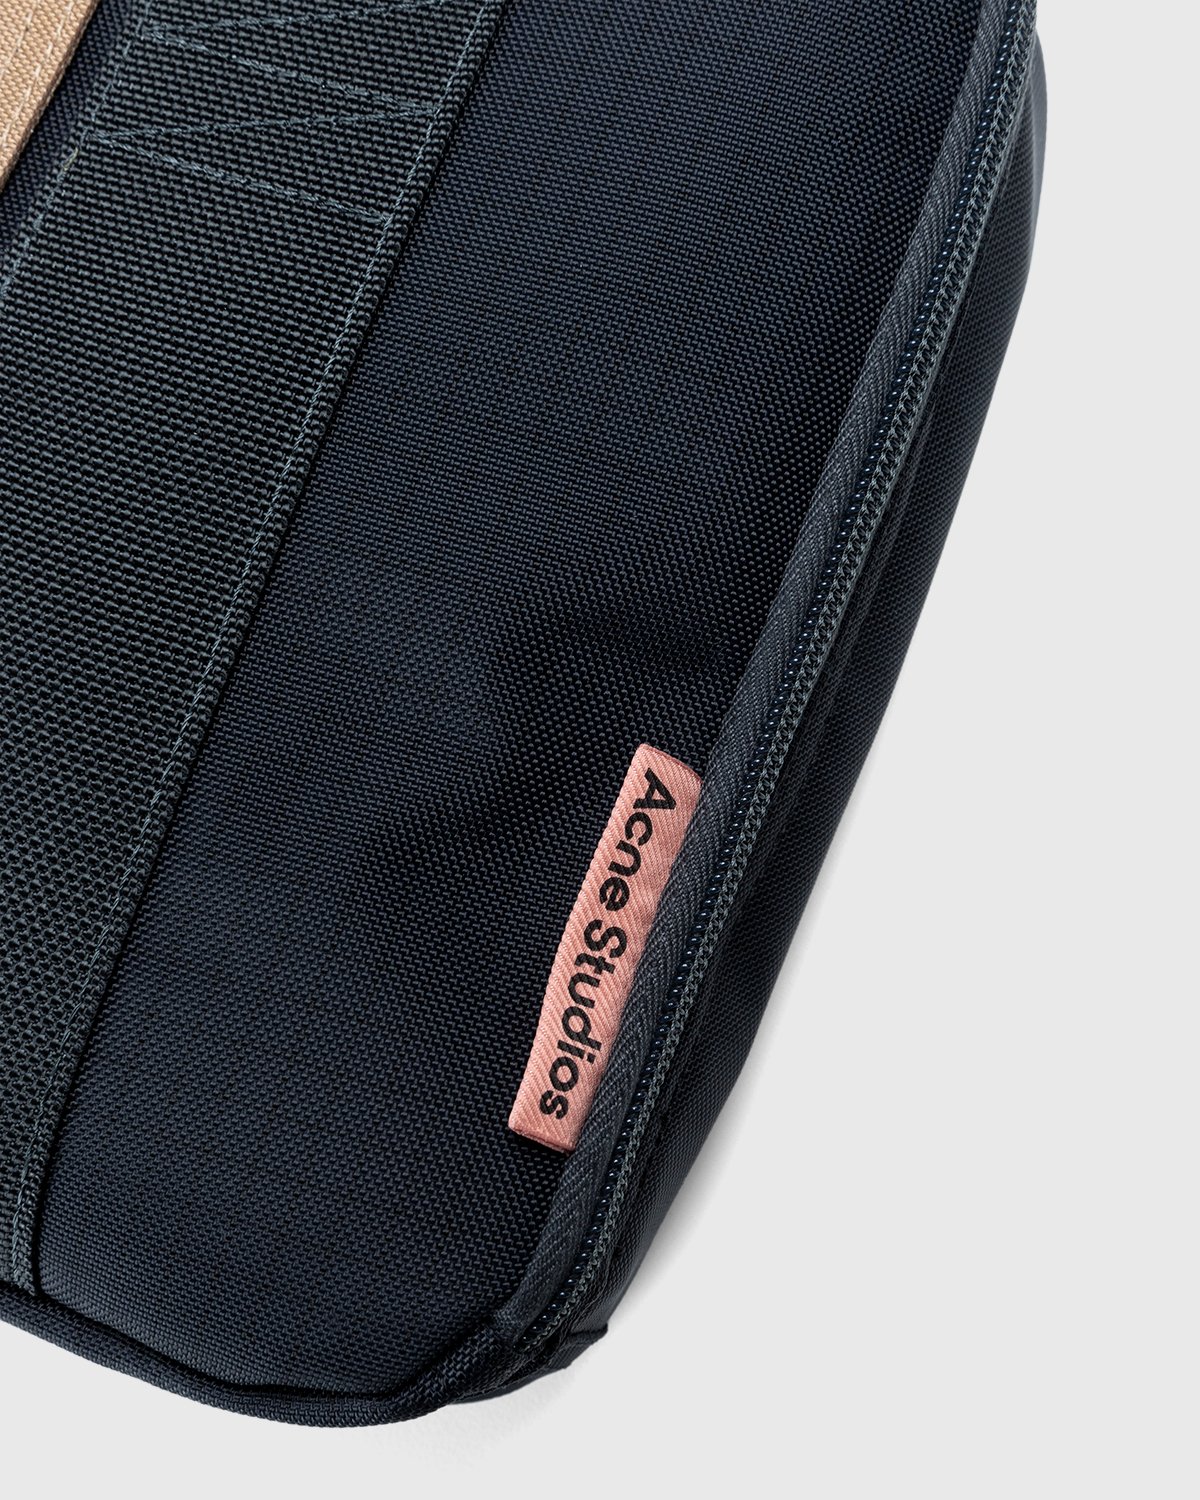 Acne Studios - Nylon Crossbody Laptop Bag Black/Khaki Green - Accessories - Black - Image 4